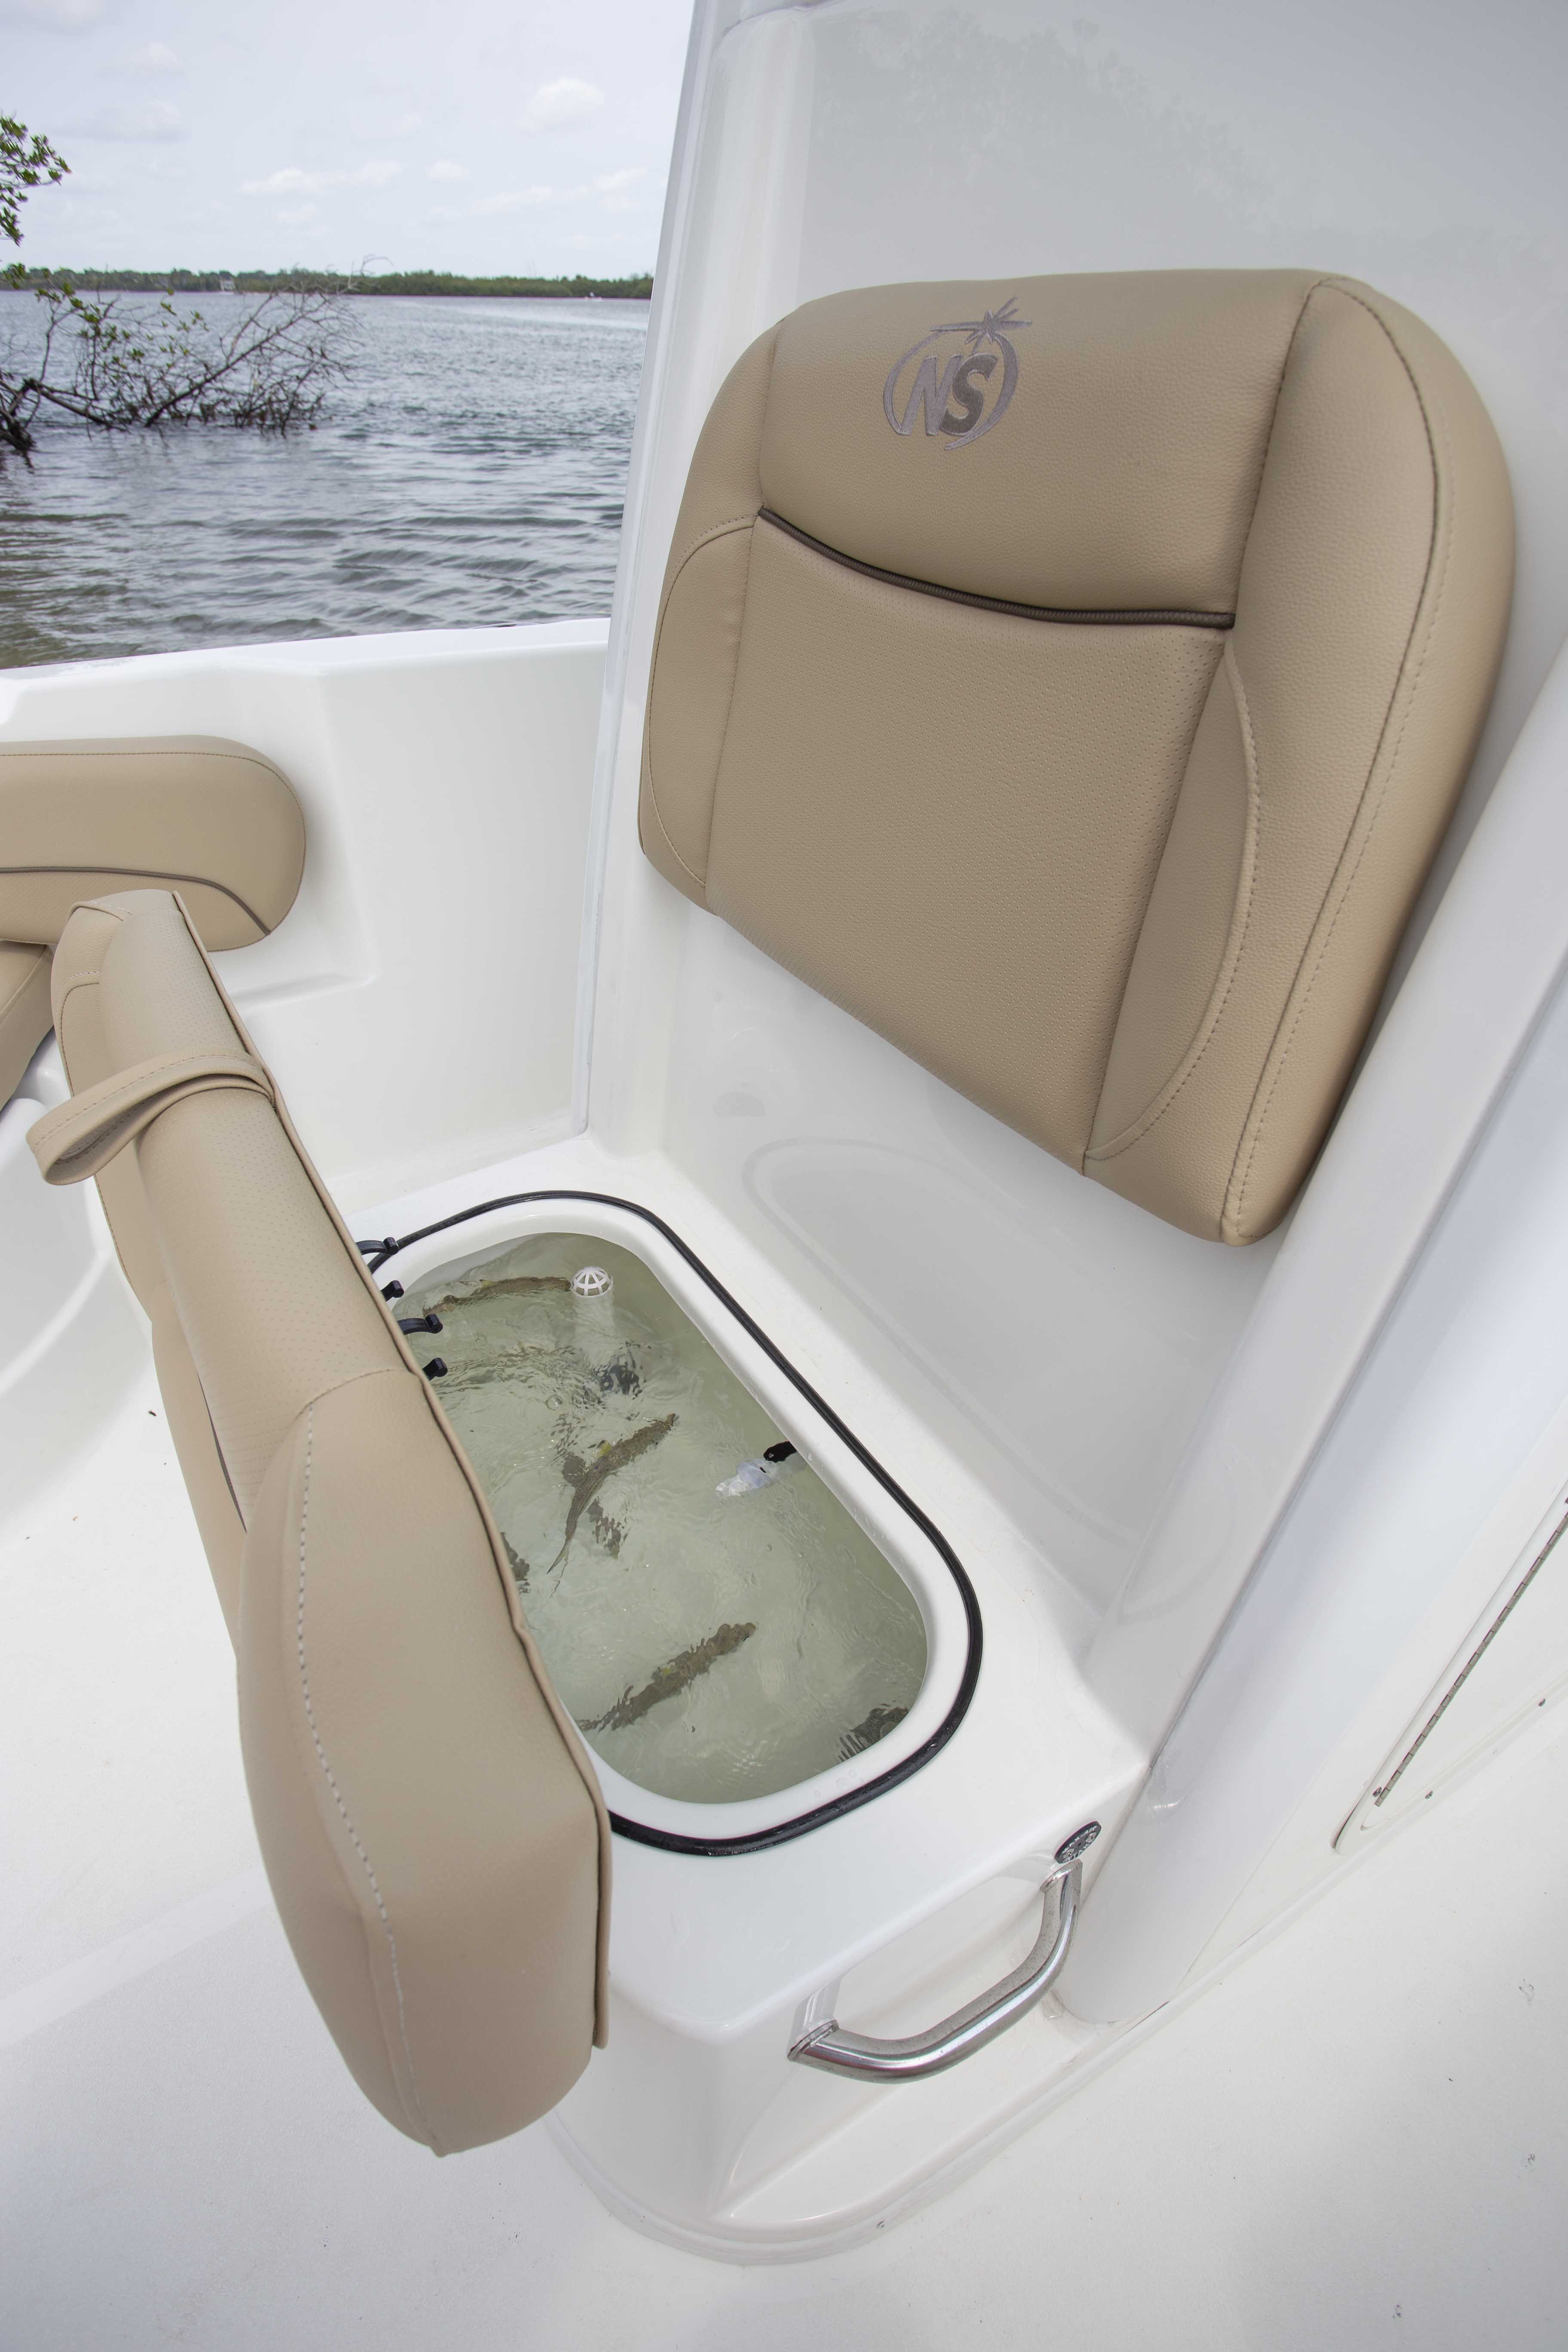 Boat Review - NauticStar 251 Hybrid - Florida Sportsman